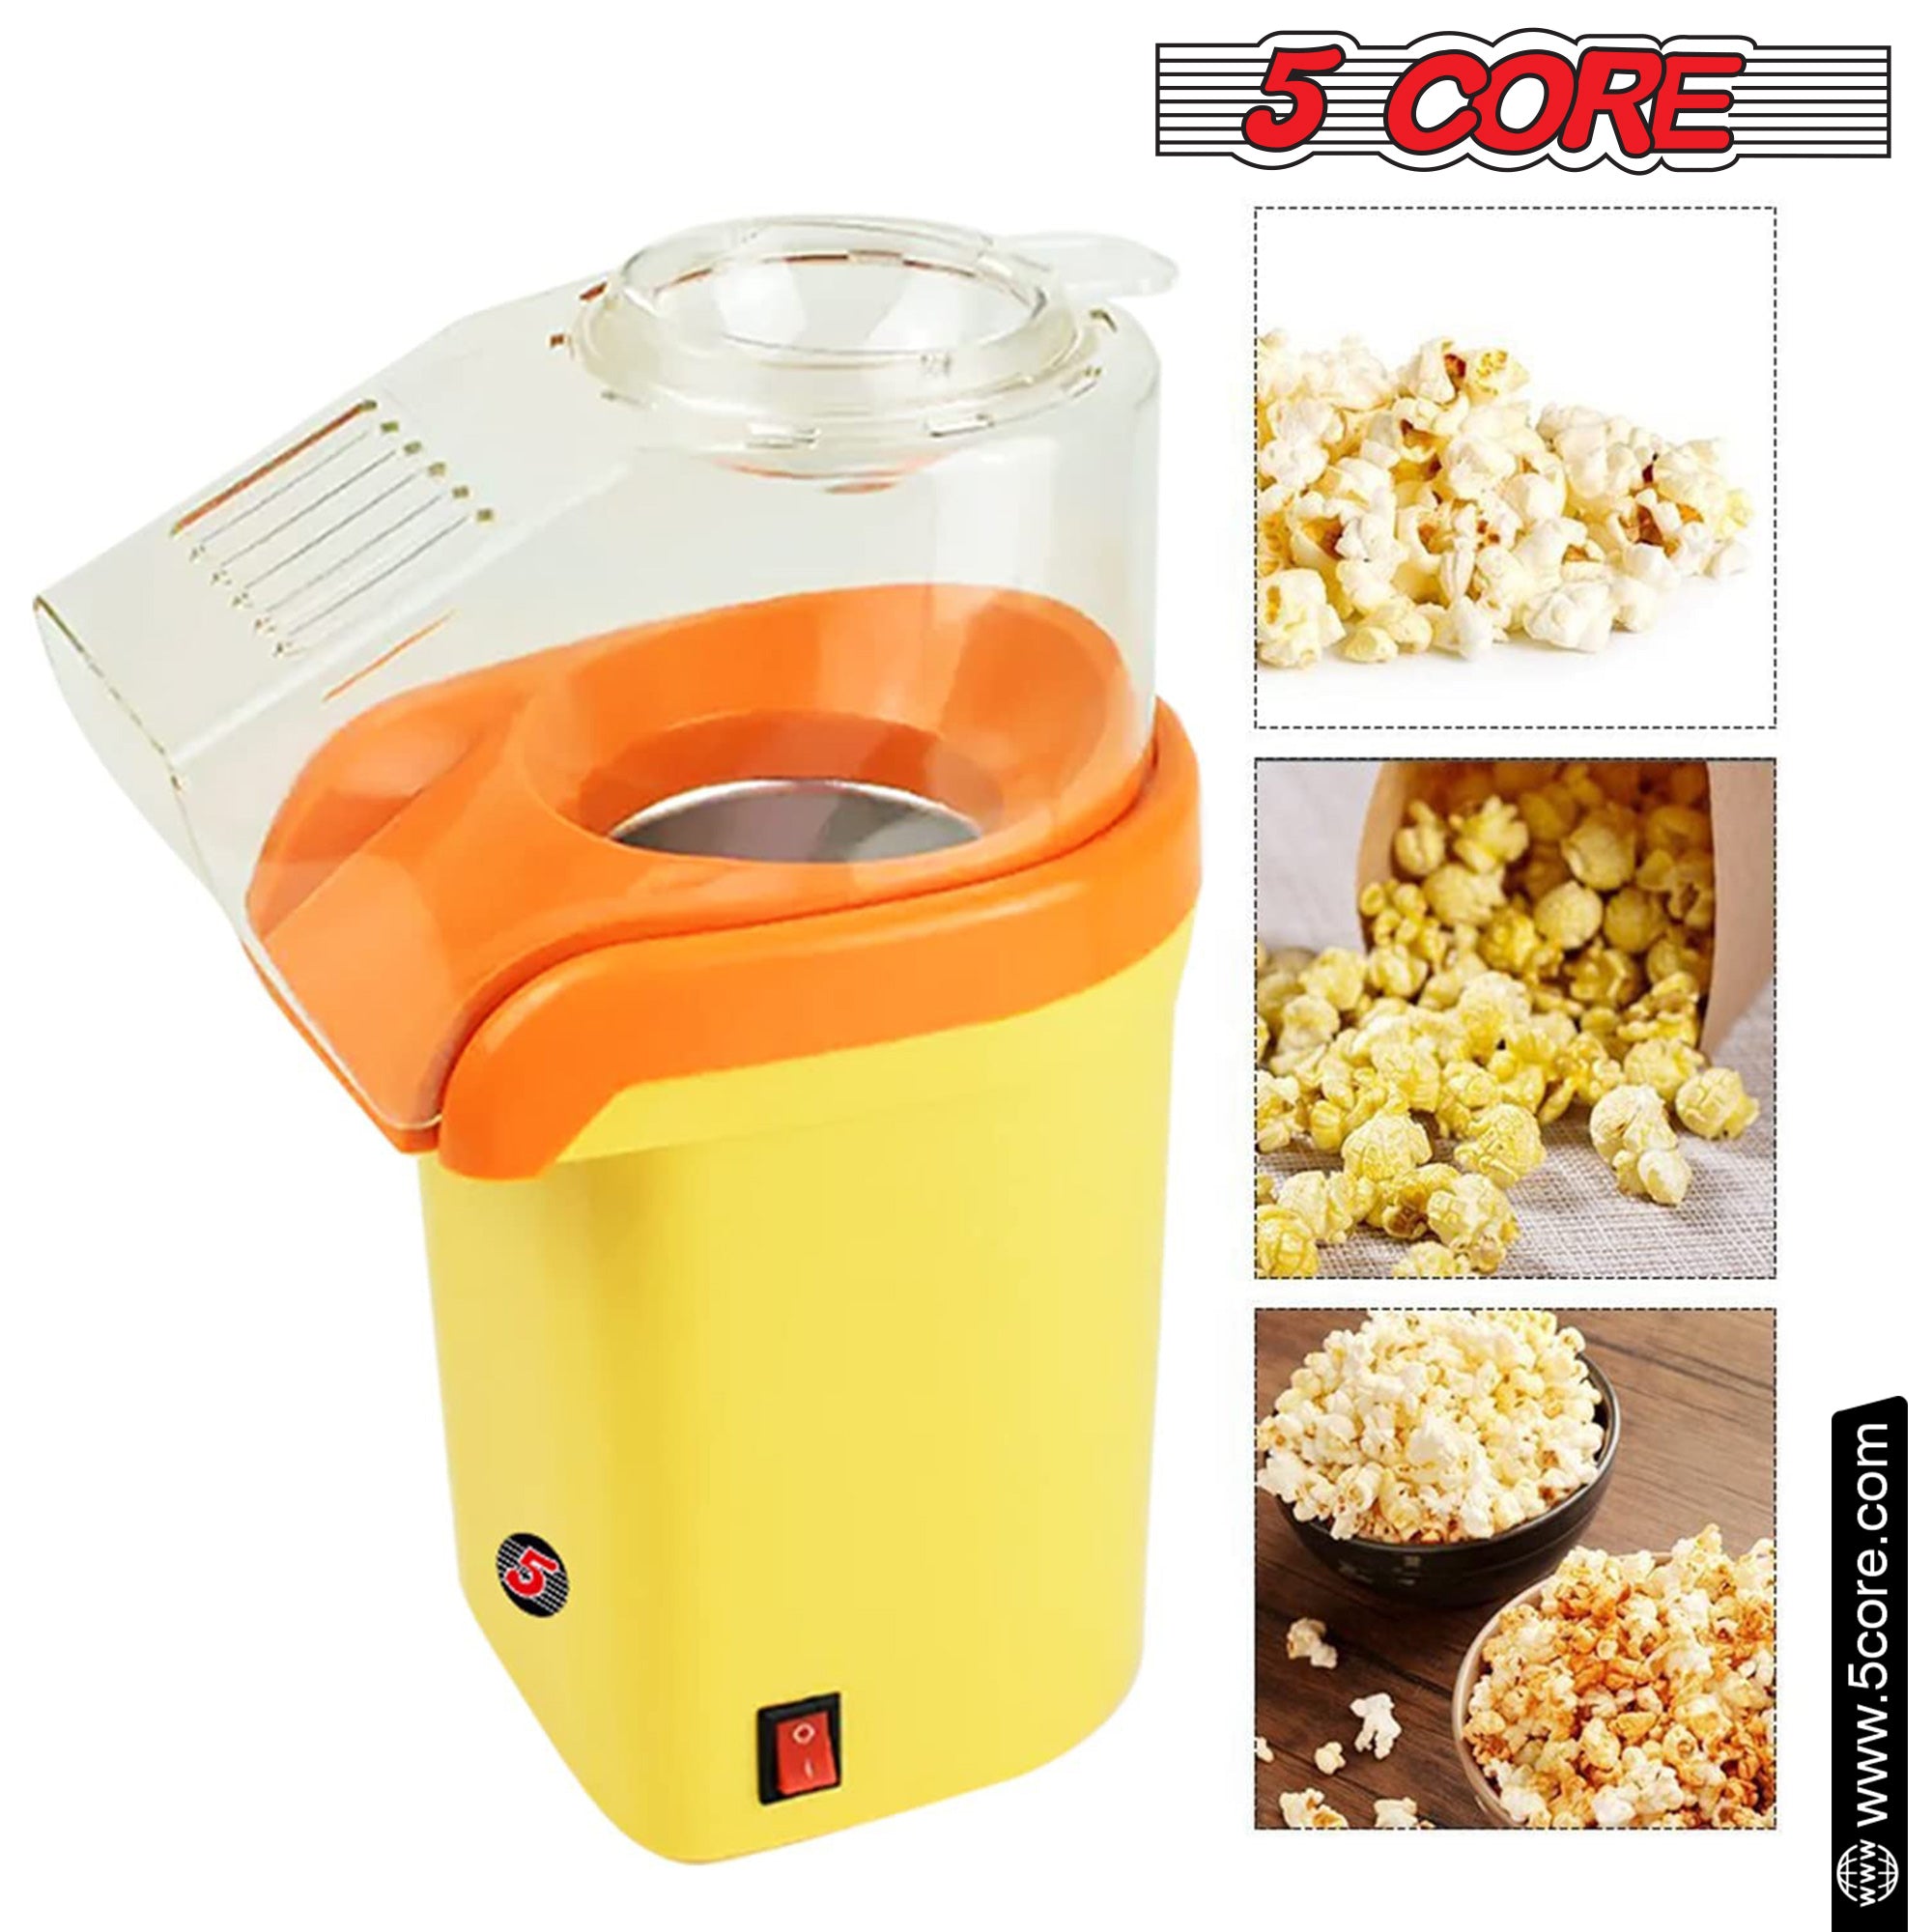 5 Core Popcorn Machine Yellow Capacity 16Cups Hot Air Popcorn Popper Maker Compact Pop Corn Machine